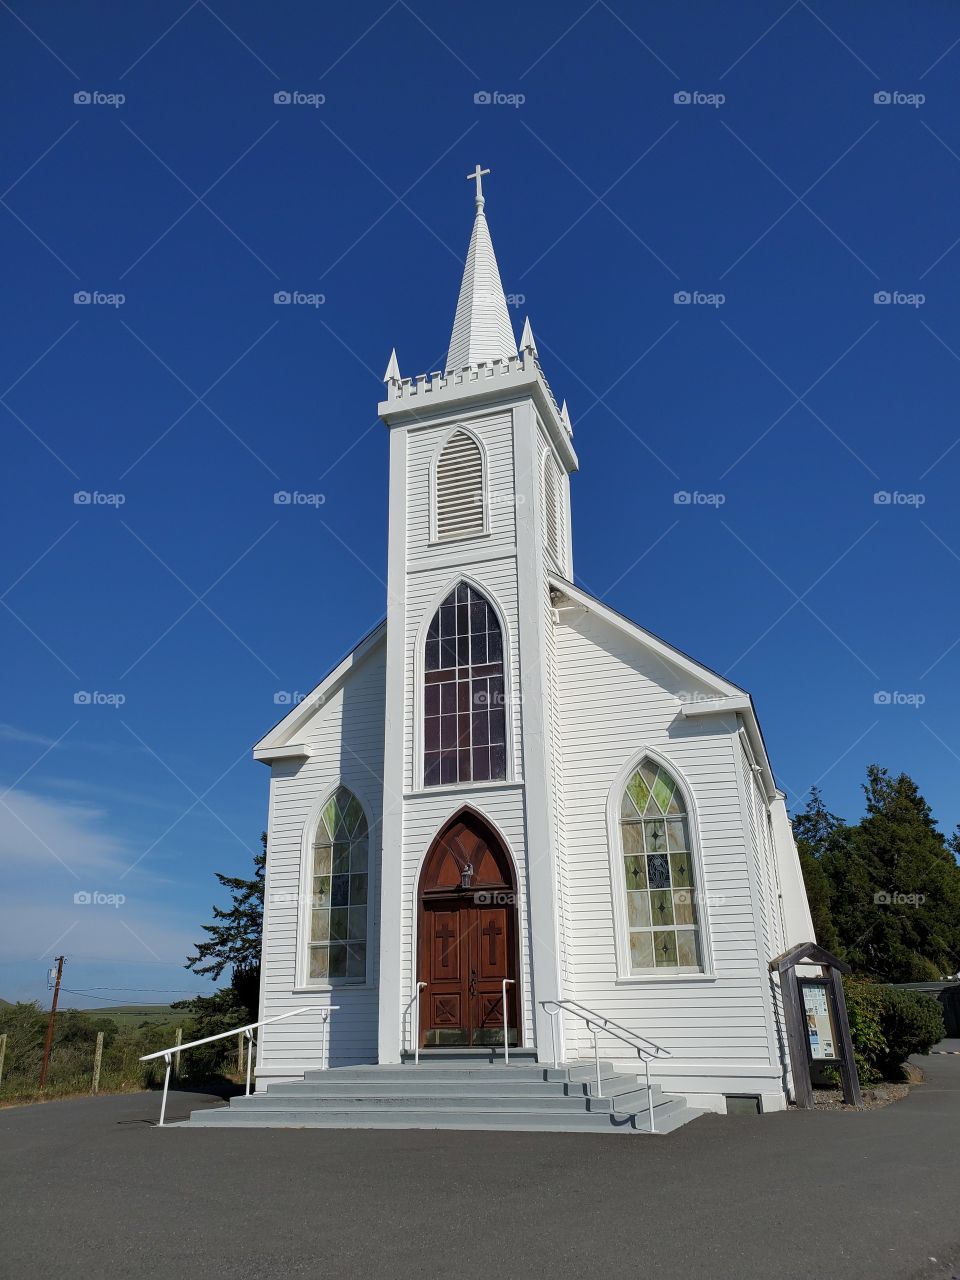 Beautiful Saint Teresa of Avila Church in Bodega, California. Site in the Alfred Hitchcock movie, The Birds.